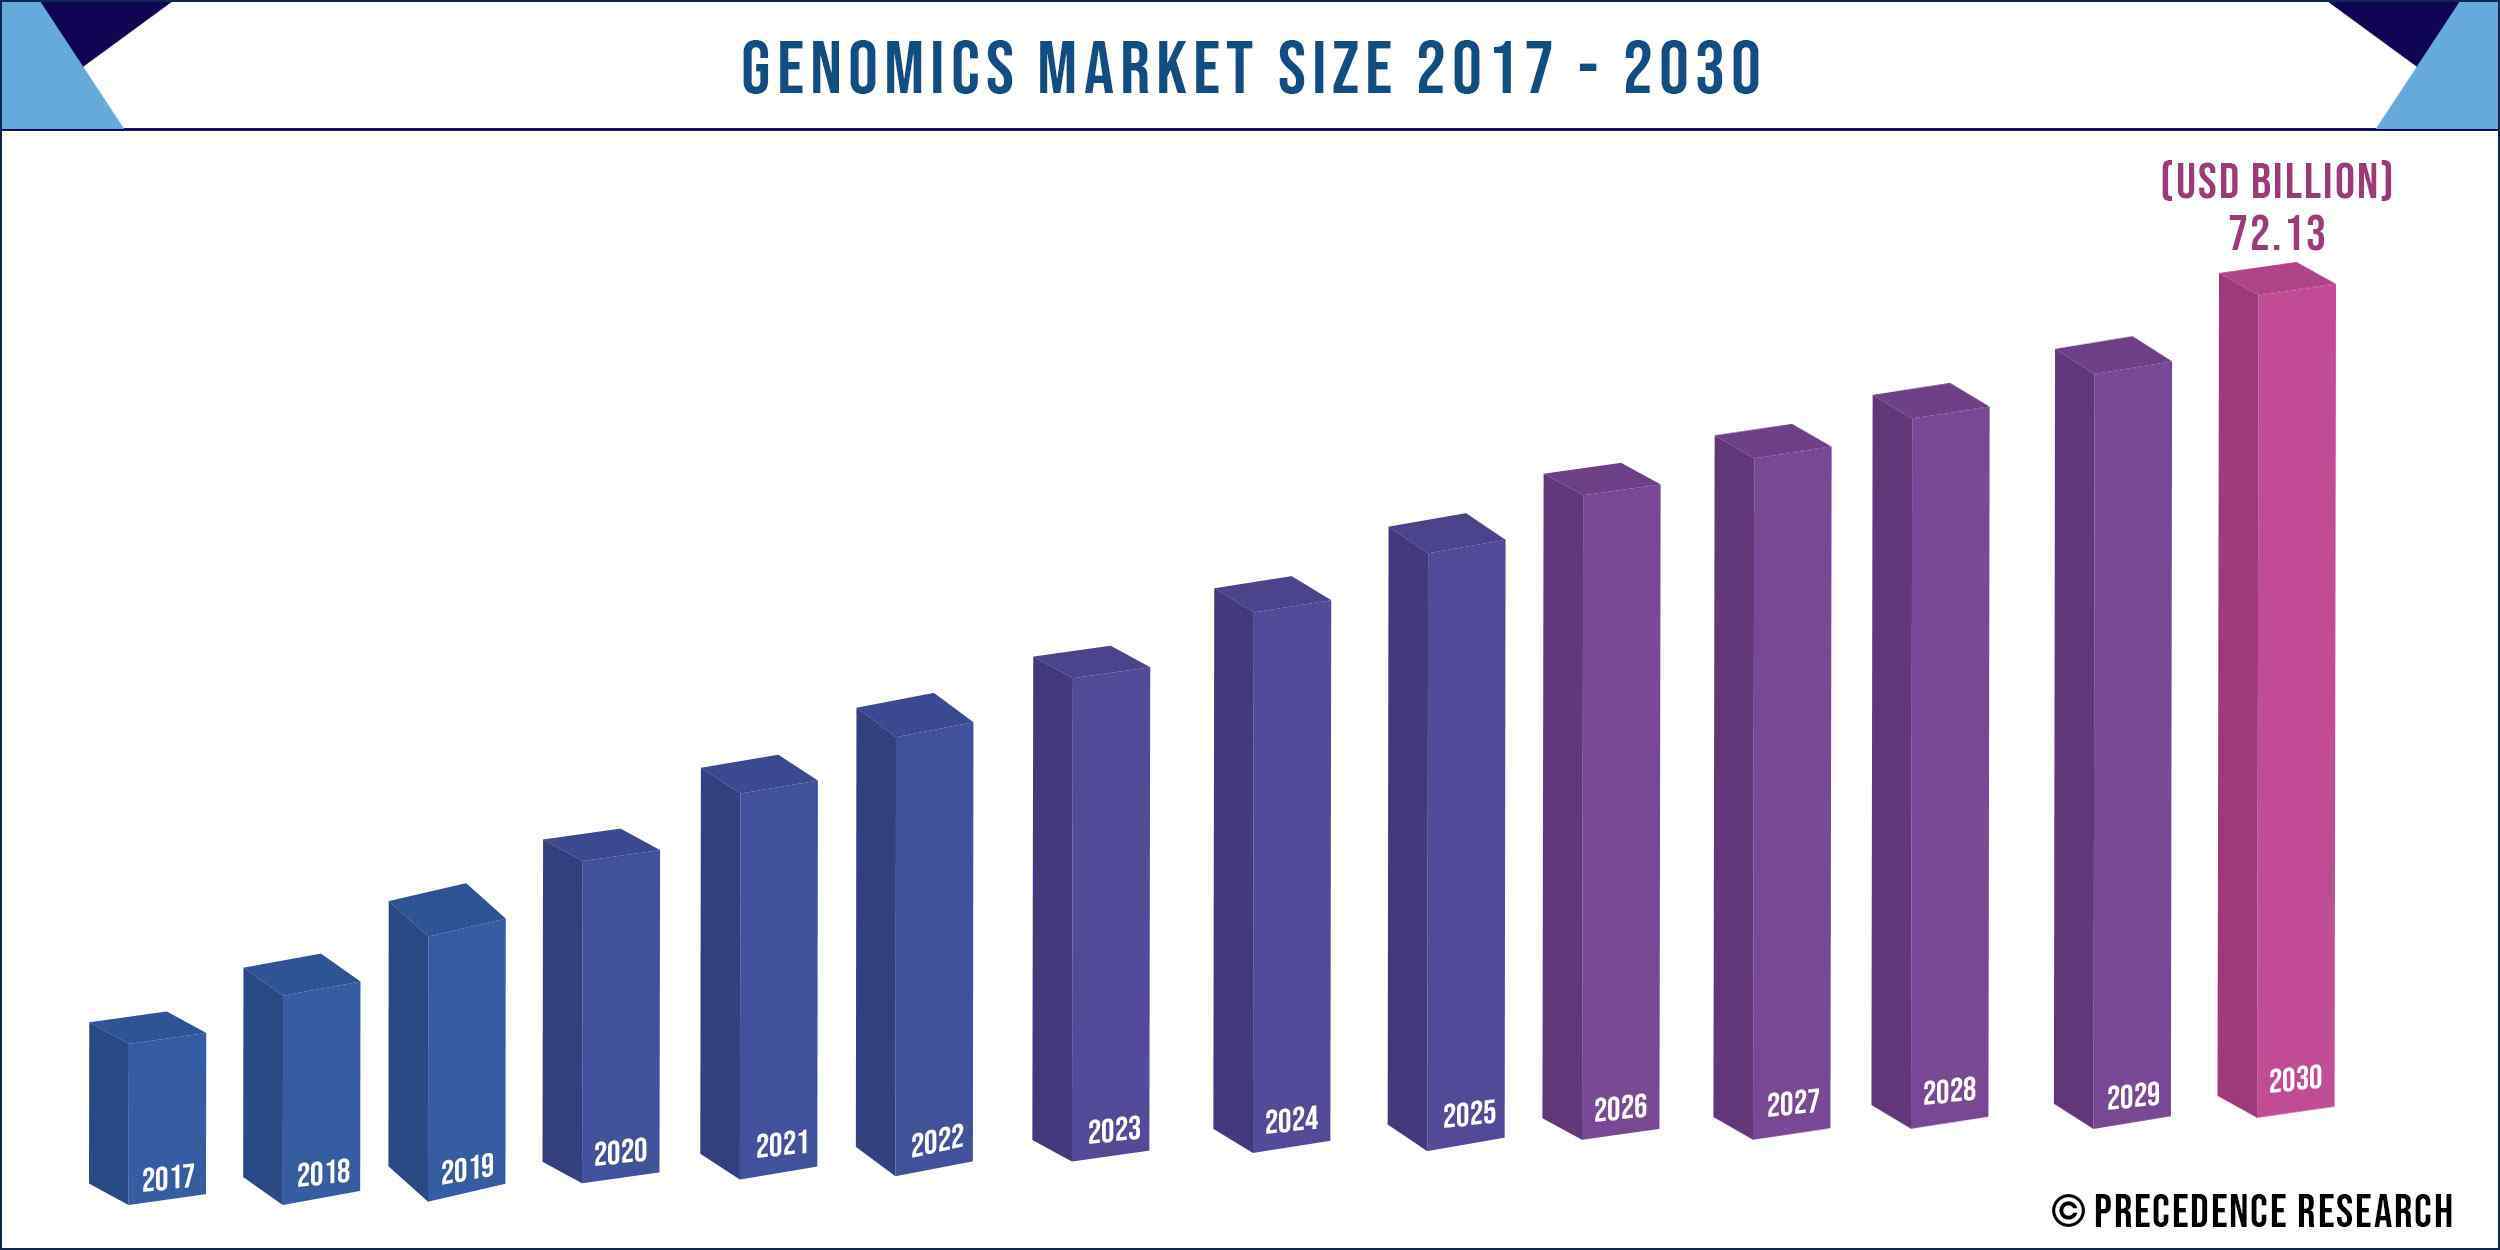 Genomics Market Size 2017 to 2030